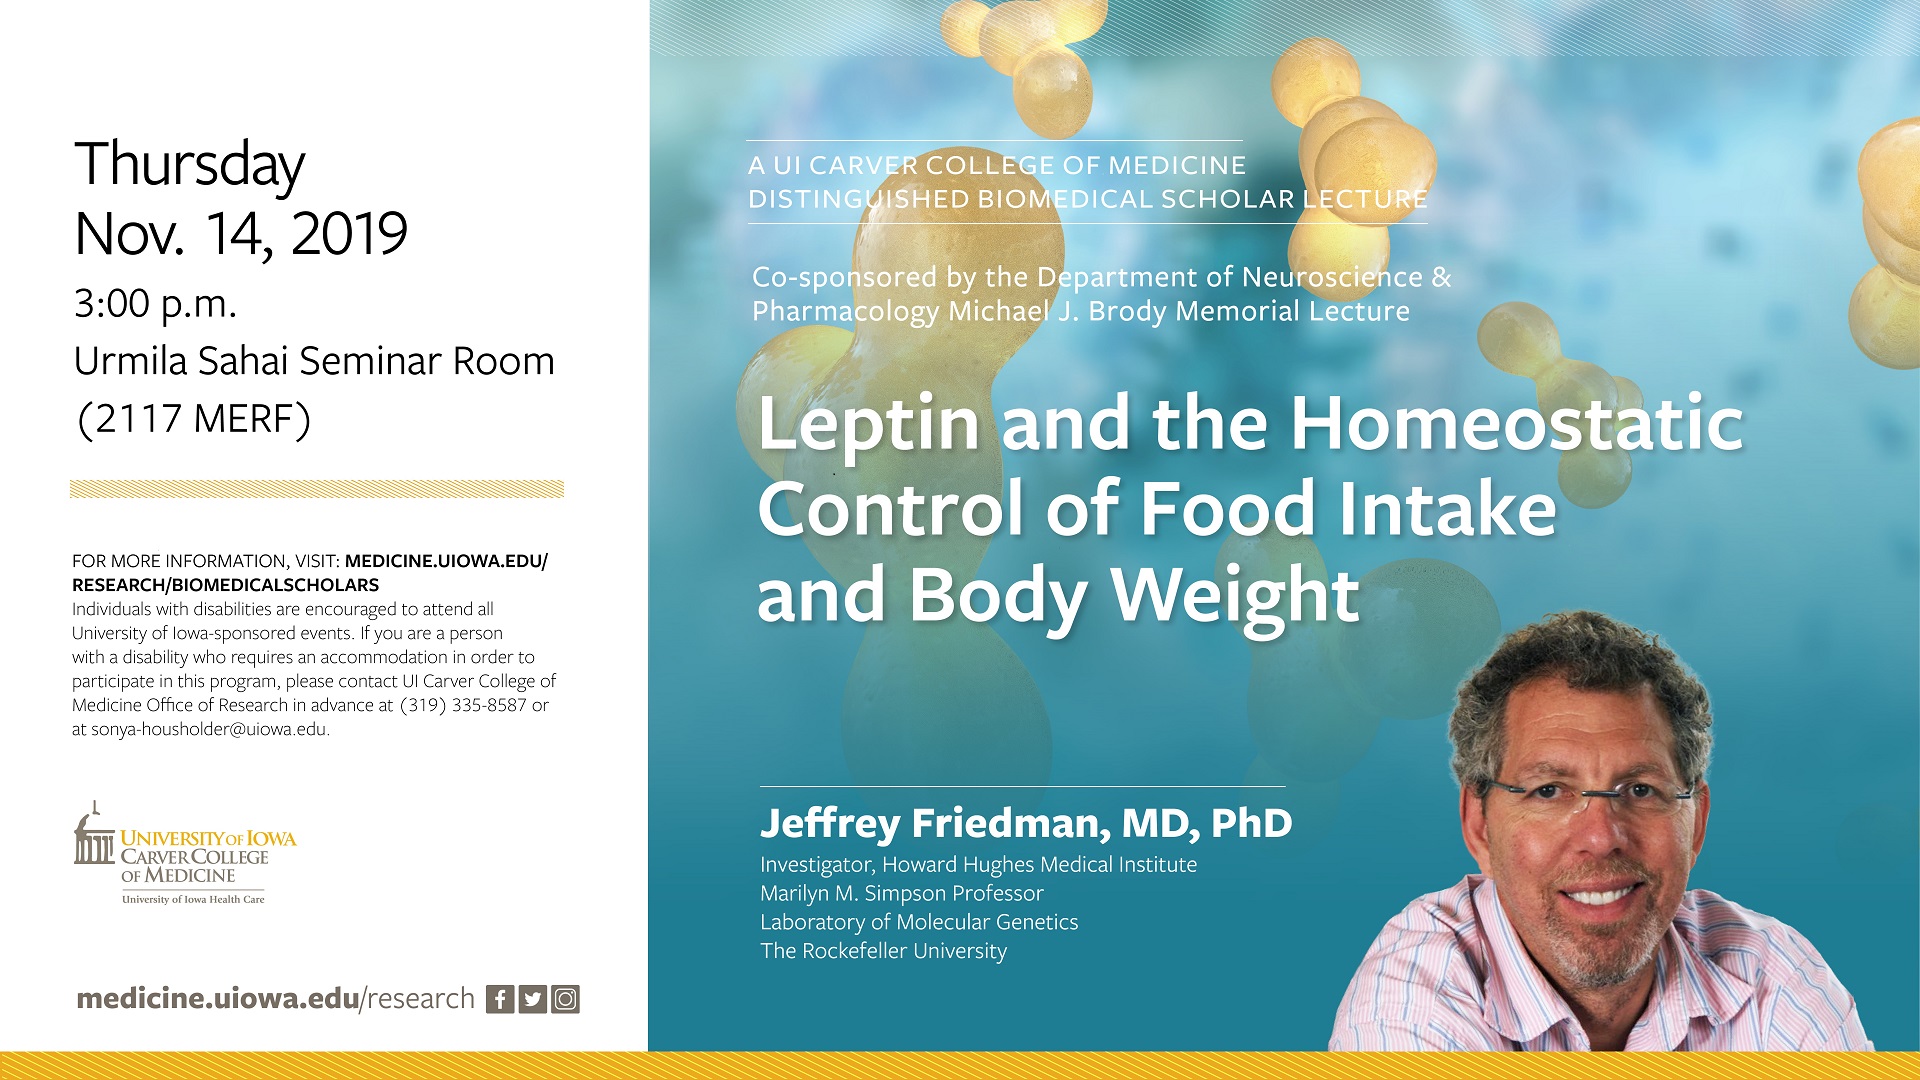 Biomedical Scholar Lecture - Jeffrey Friedman, MD, PhD